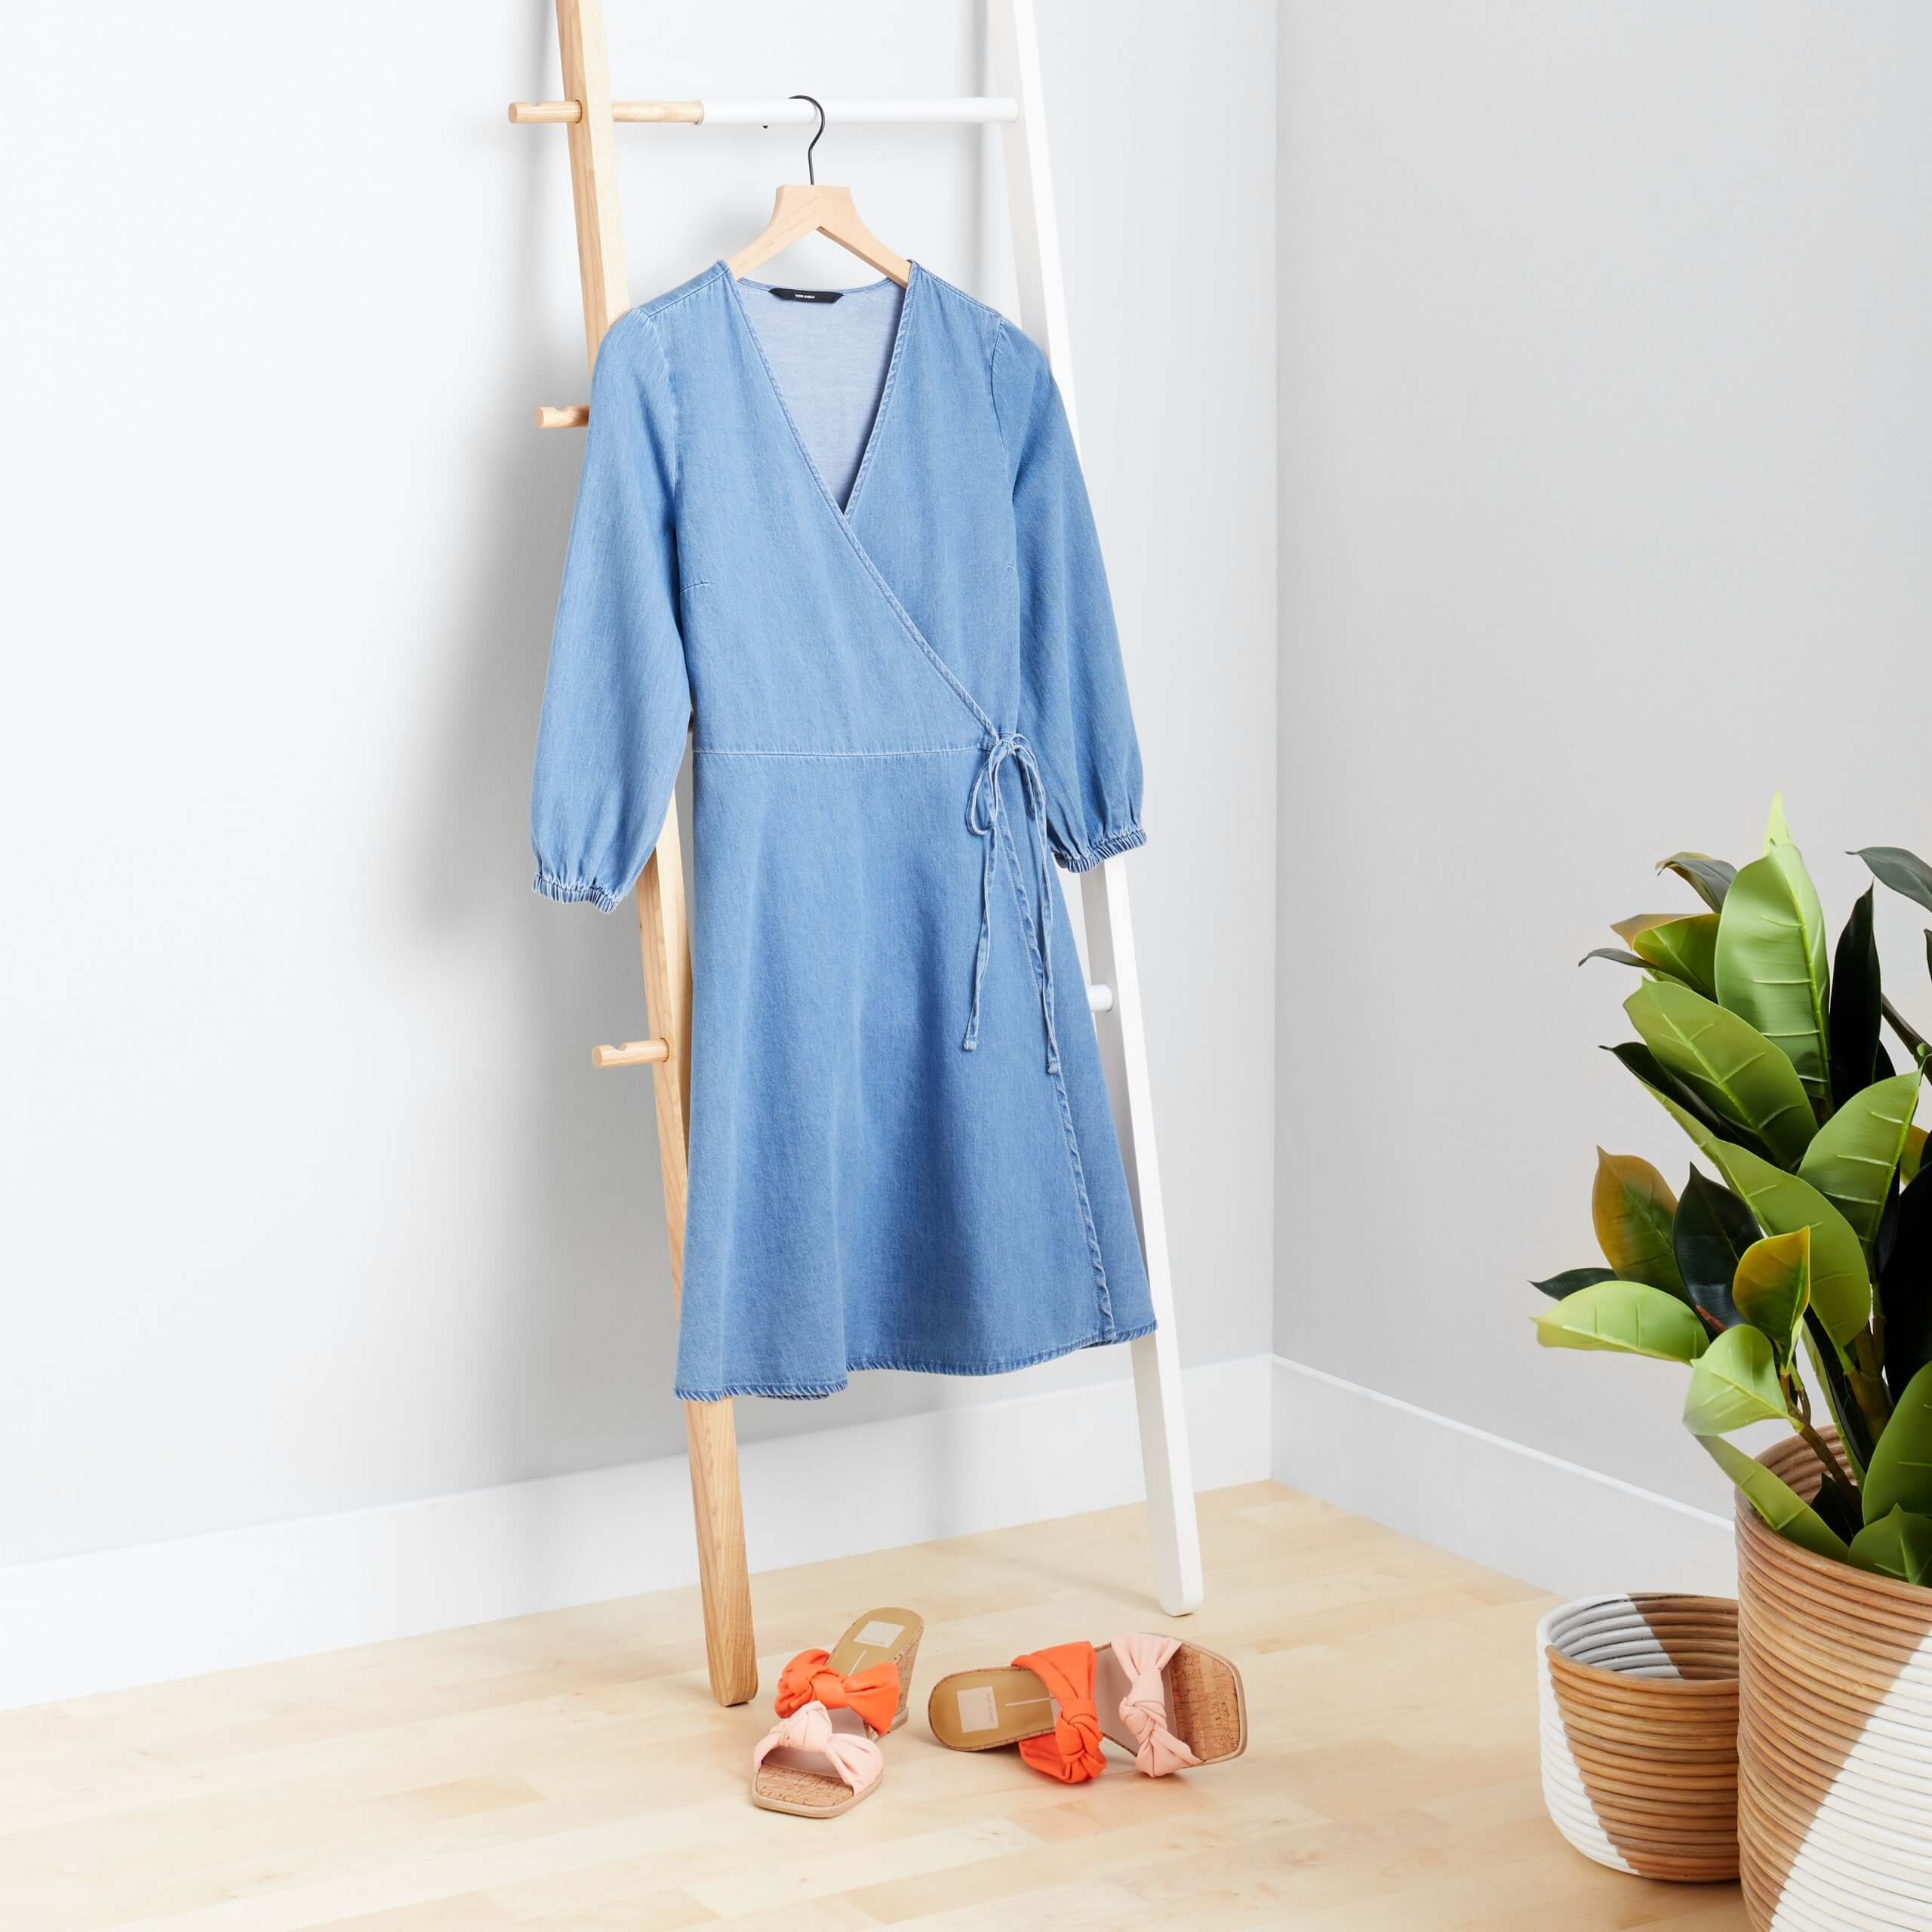 Stitch Fix women's blue wrap dress hanging on wooden ladder next to orange and pink slide wedges.